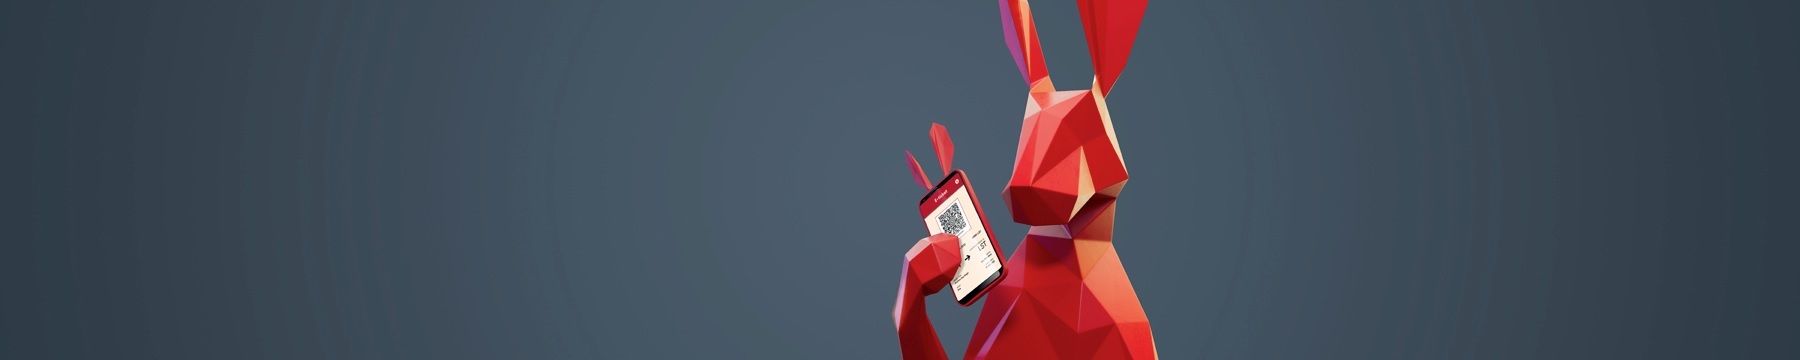 Hare on phone app